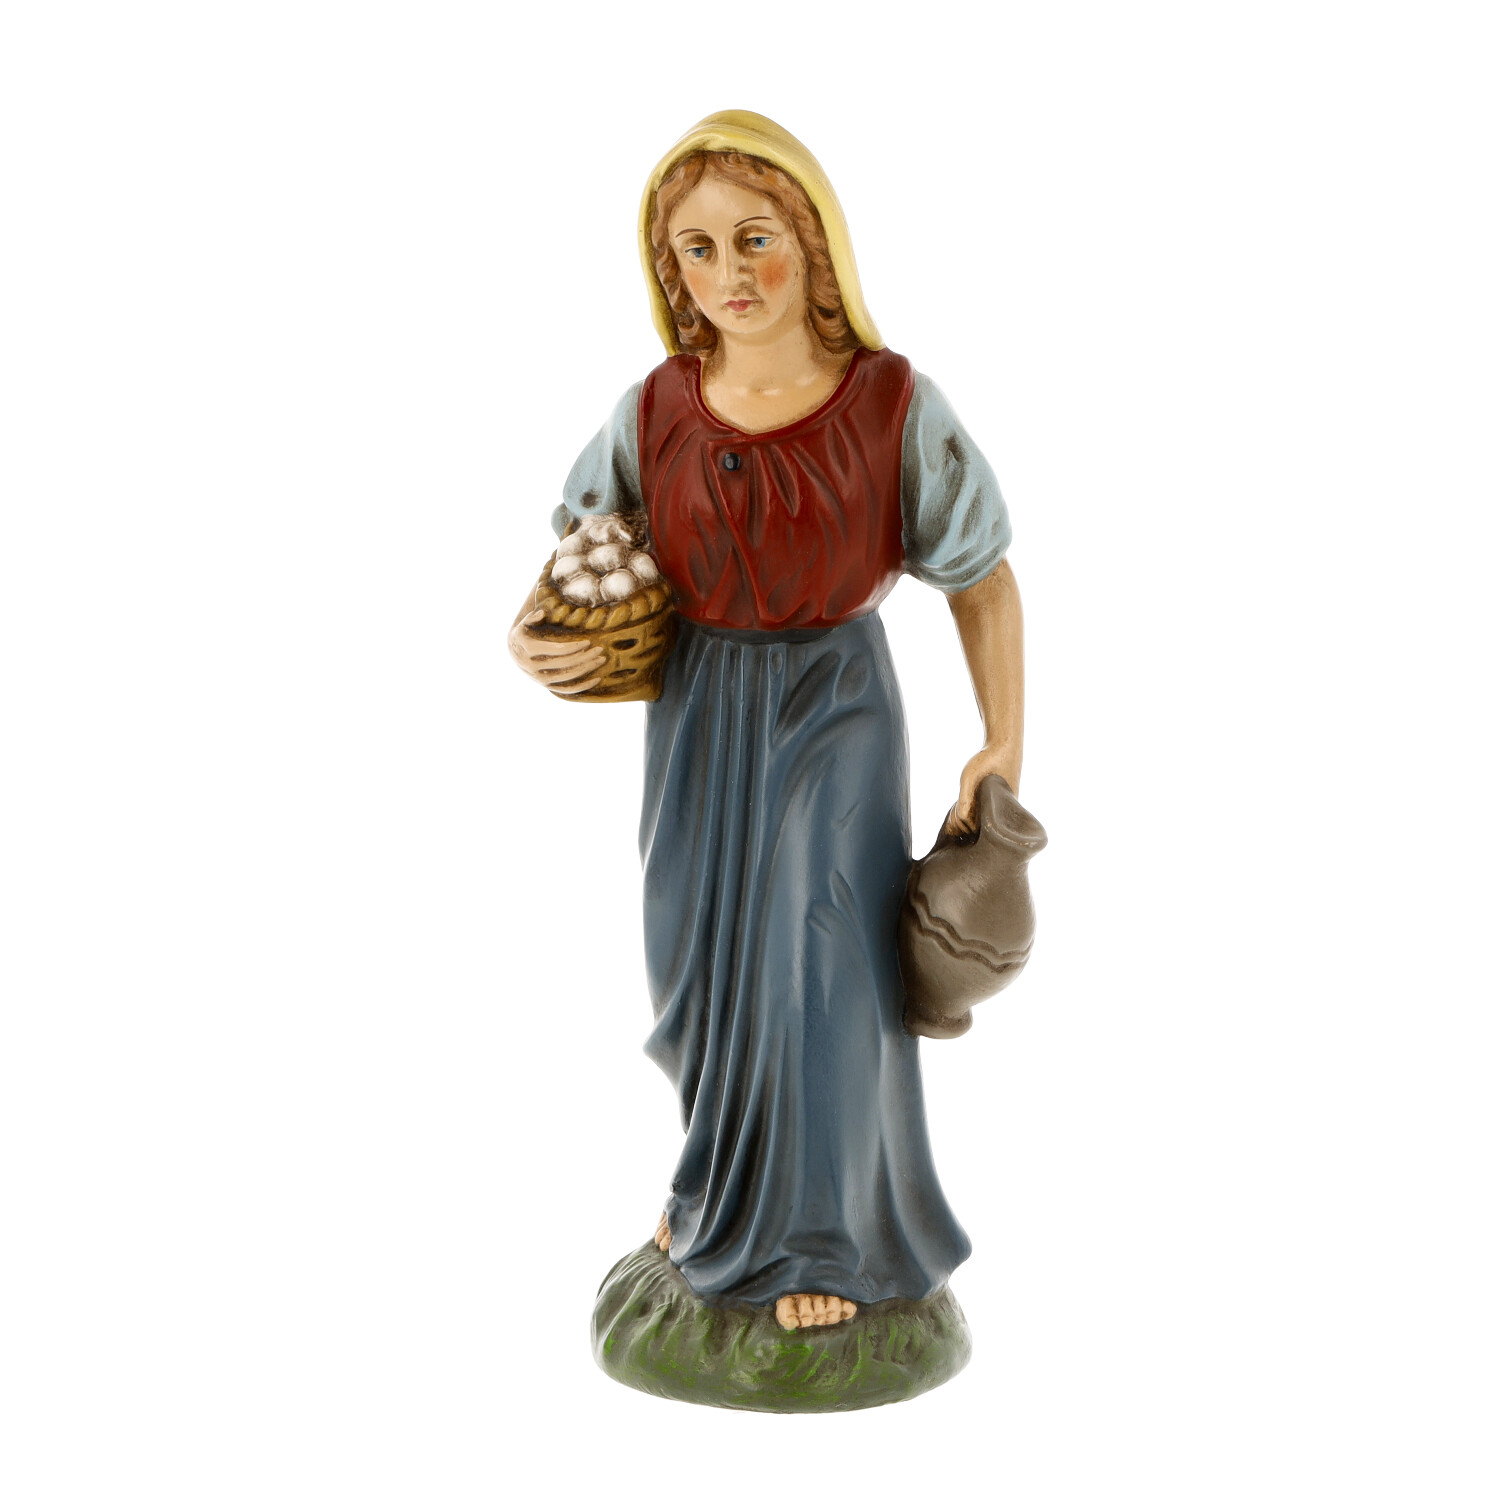 Shepherdess with egg basket - Marolin Nativity figure - made in Germany